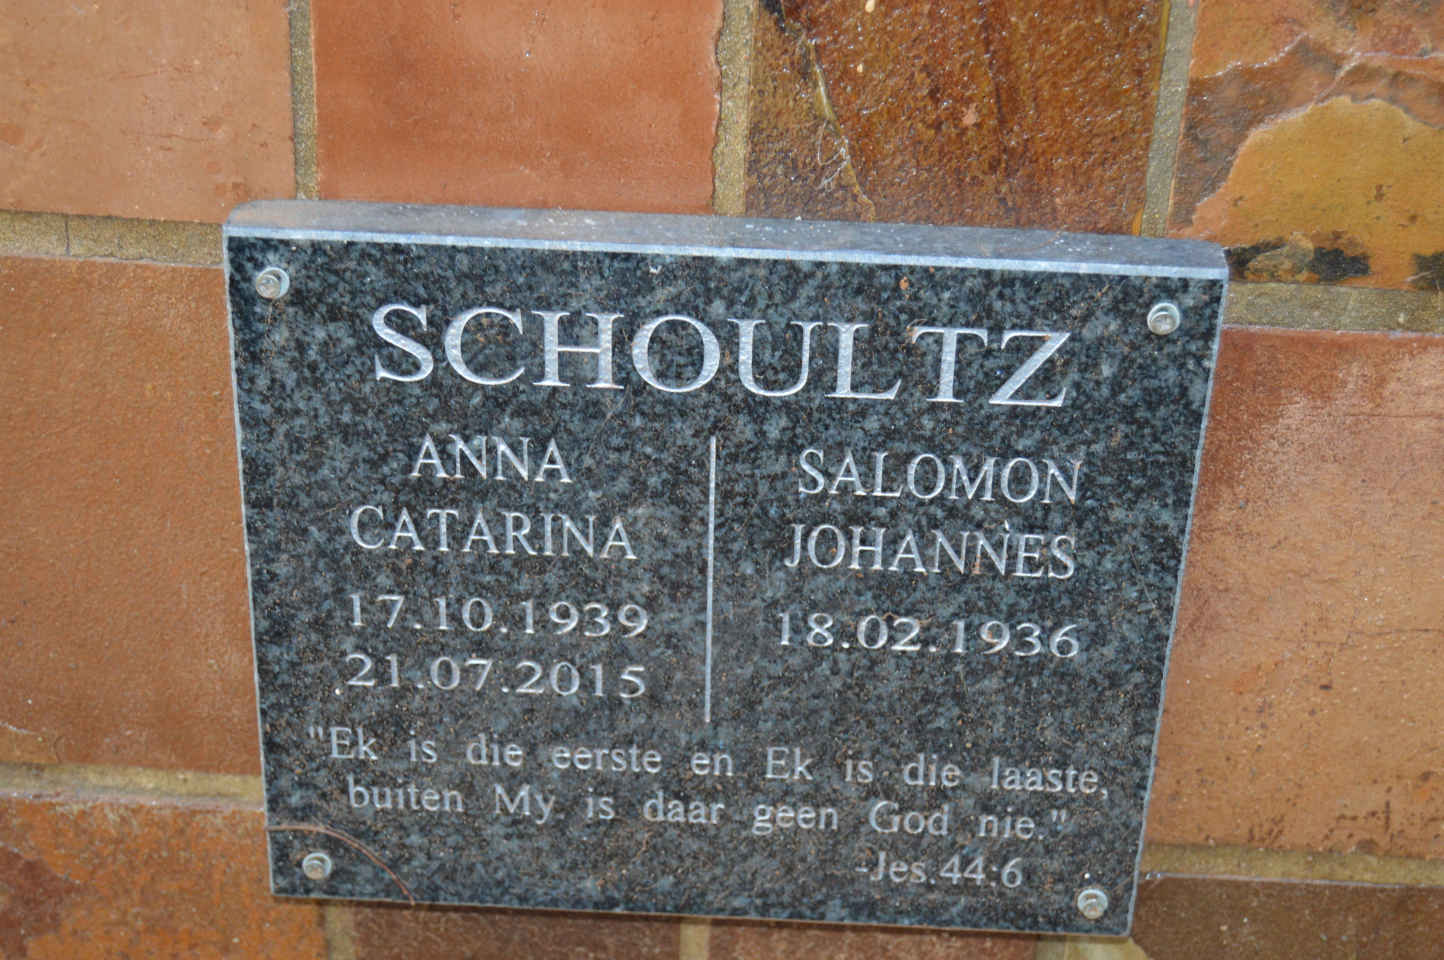 SCHOULTZ Salomon Johannes 1936- & Anna Catarina 1939-2015